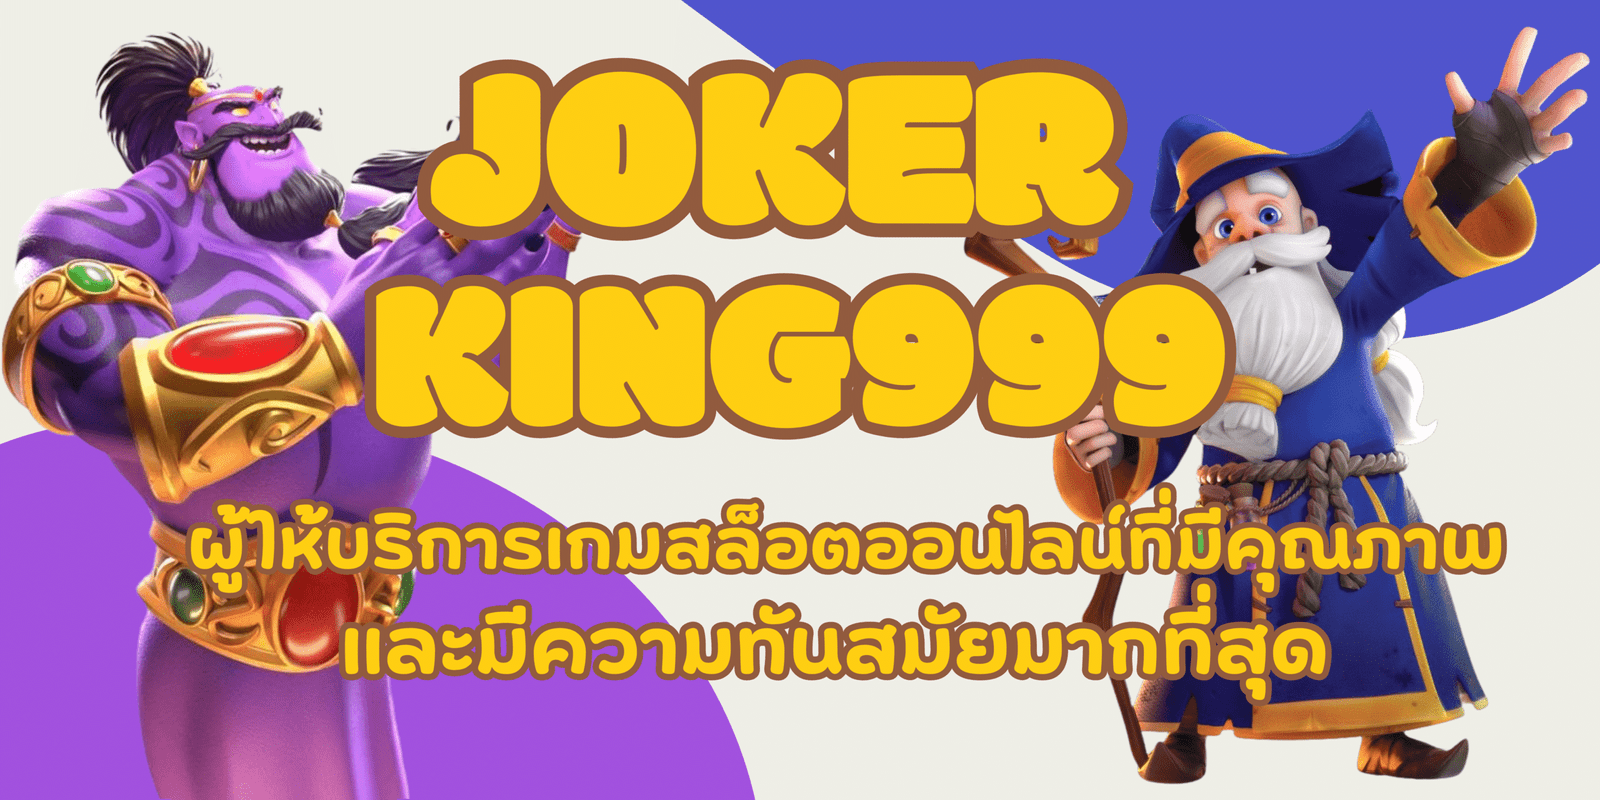 joker-king999-สมัครสมาชิก